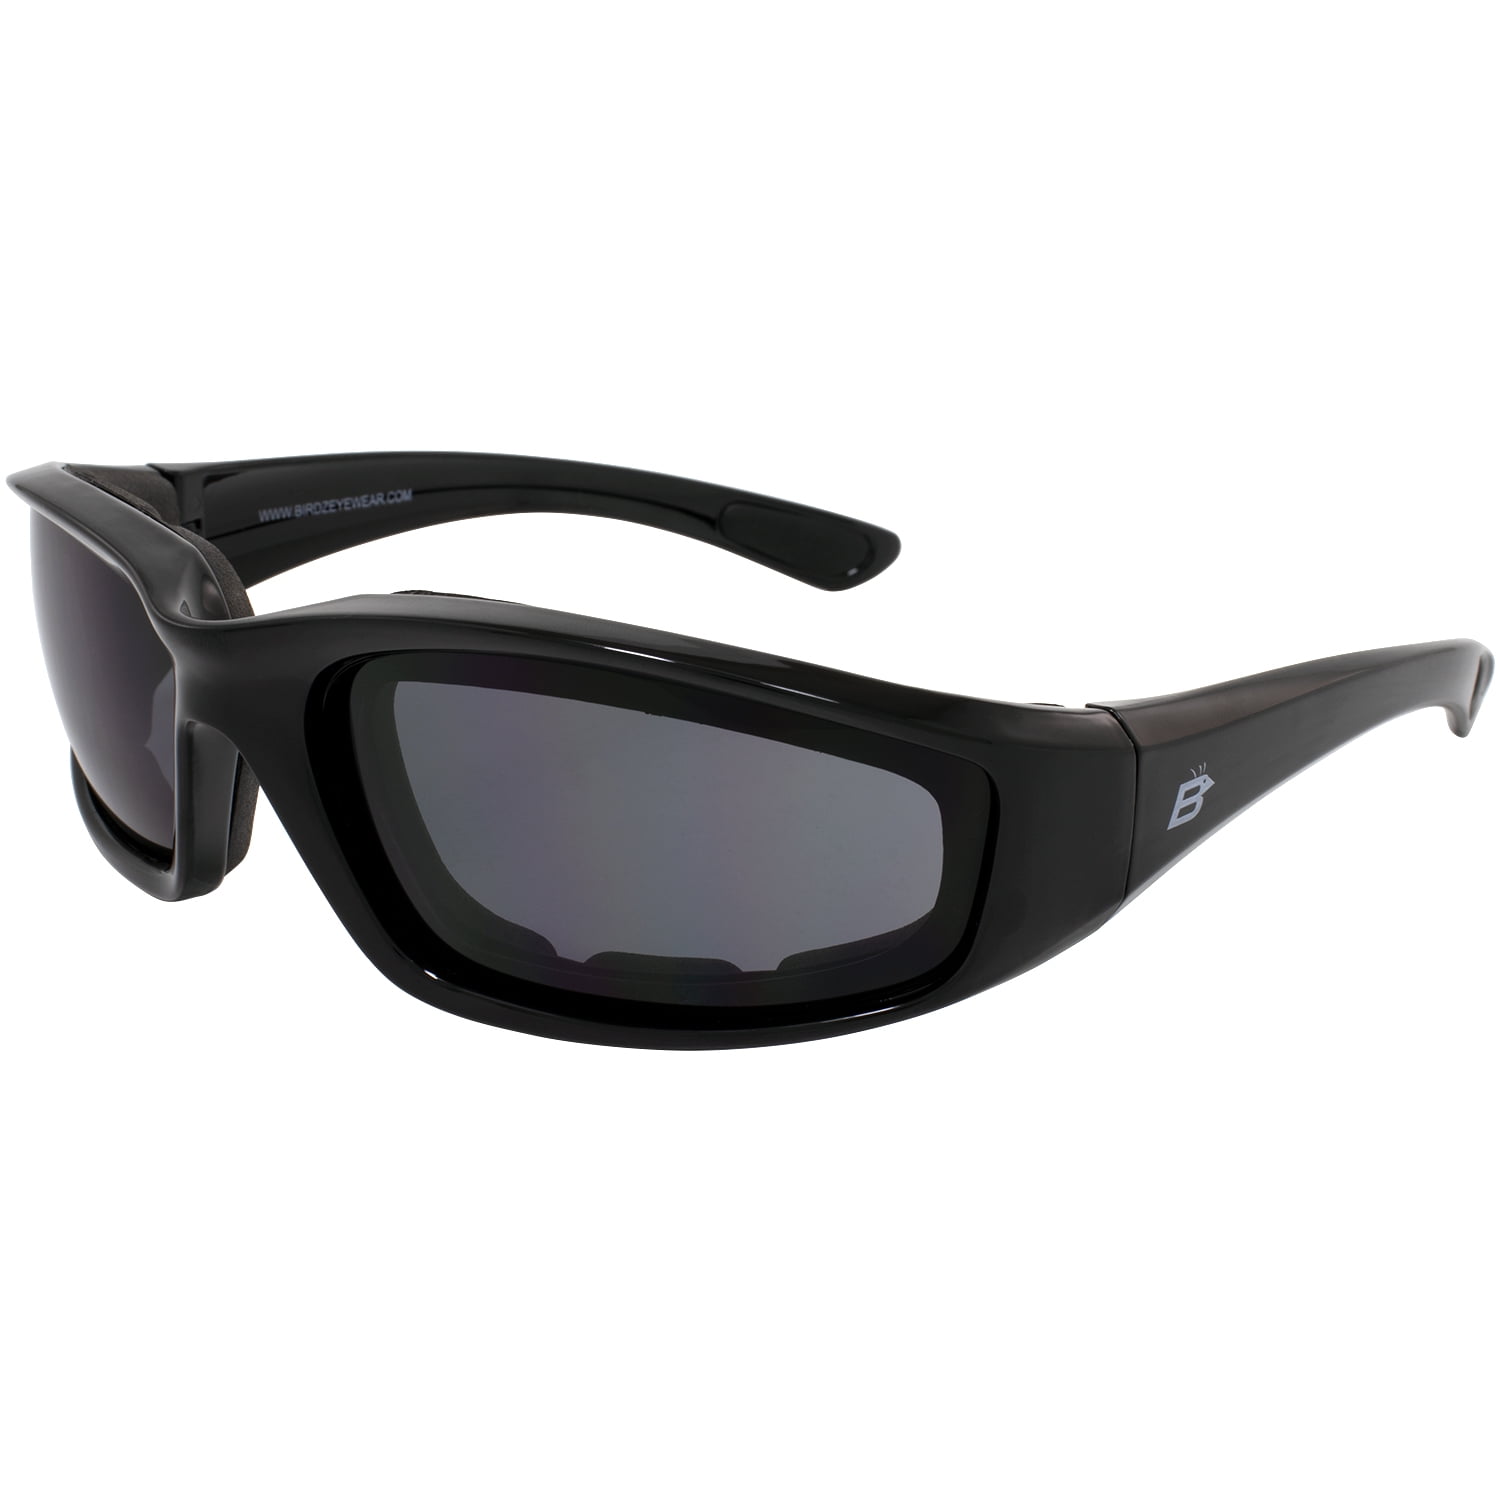 Birdz Eyewear Oriole Padded Motorcycle Riding Sunglasses Black